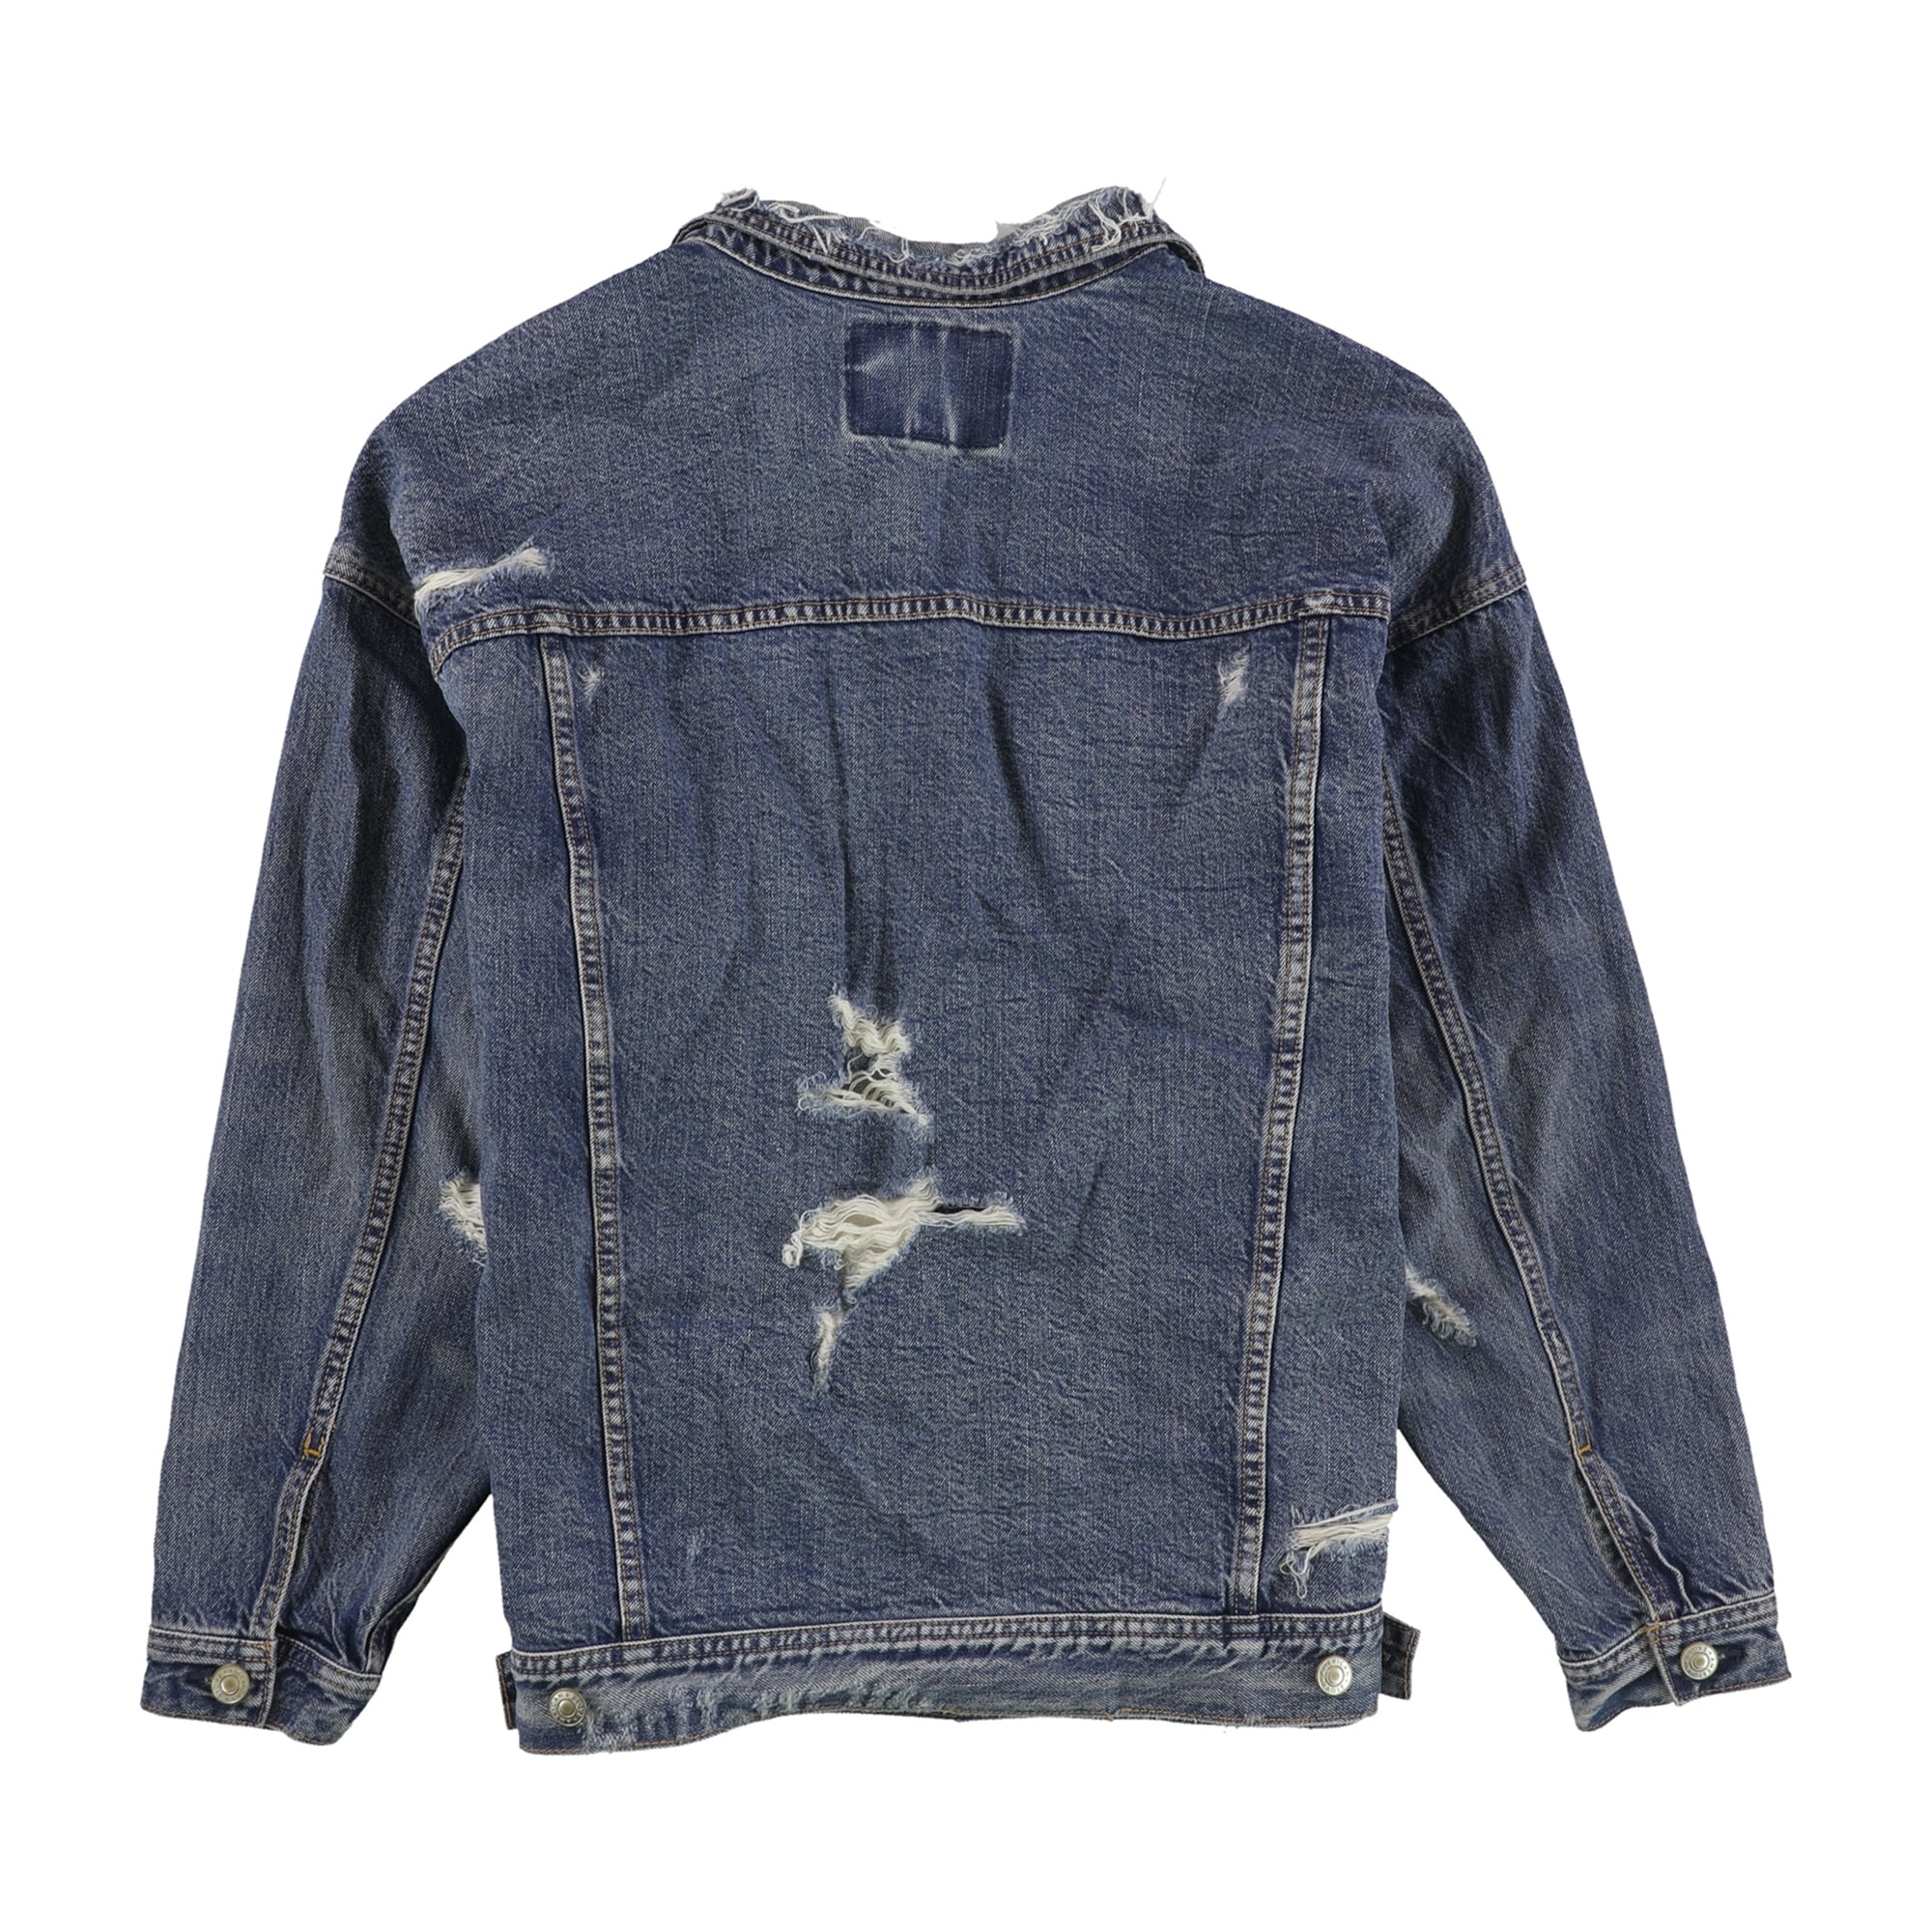 Zara | Jackets & Coats | Zara Denim Jacket Distressed | Poshmark